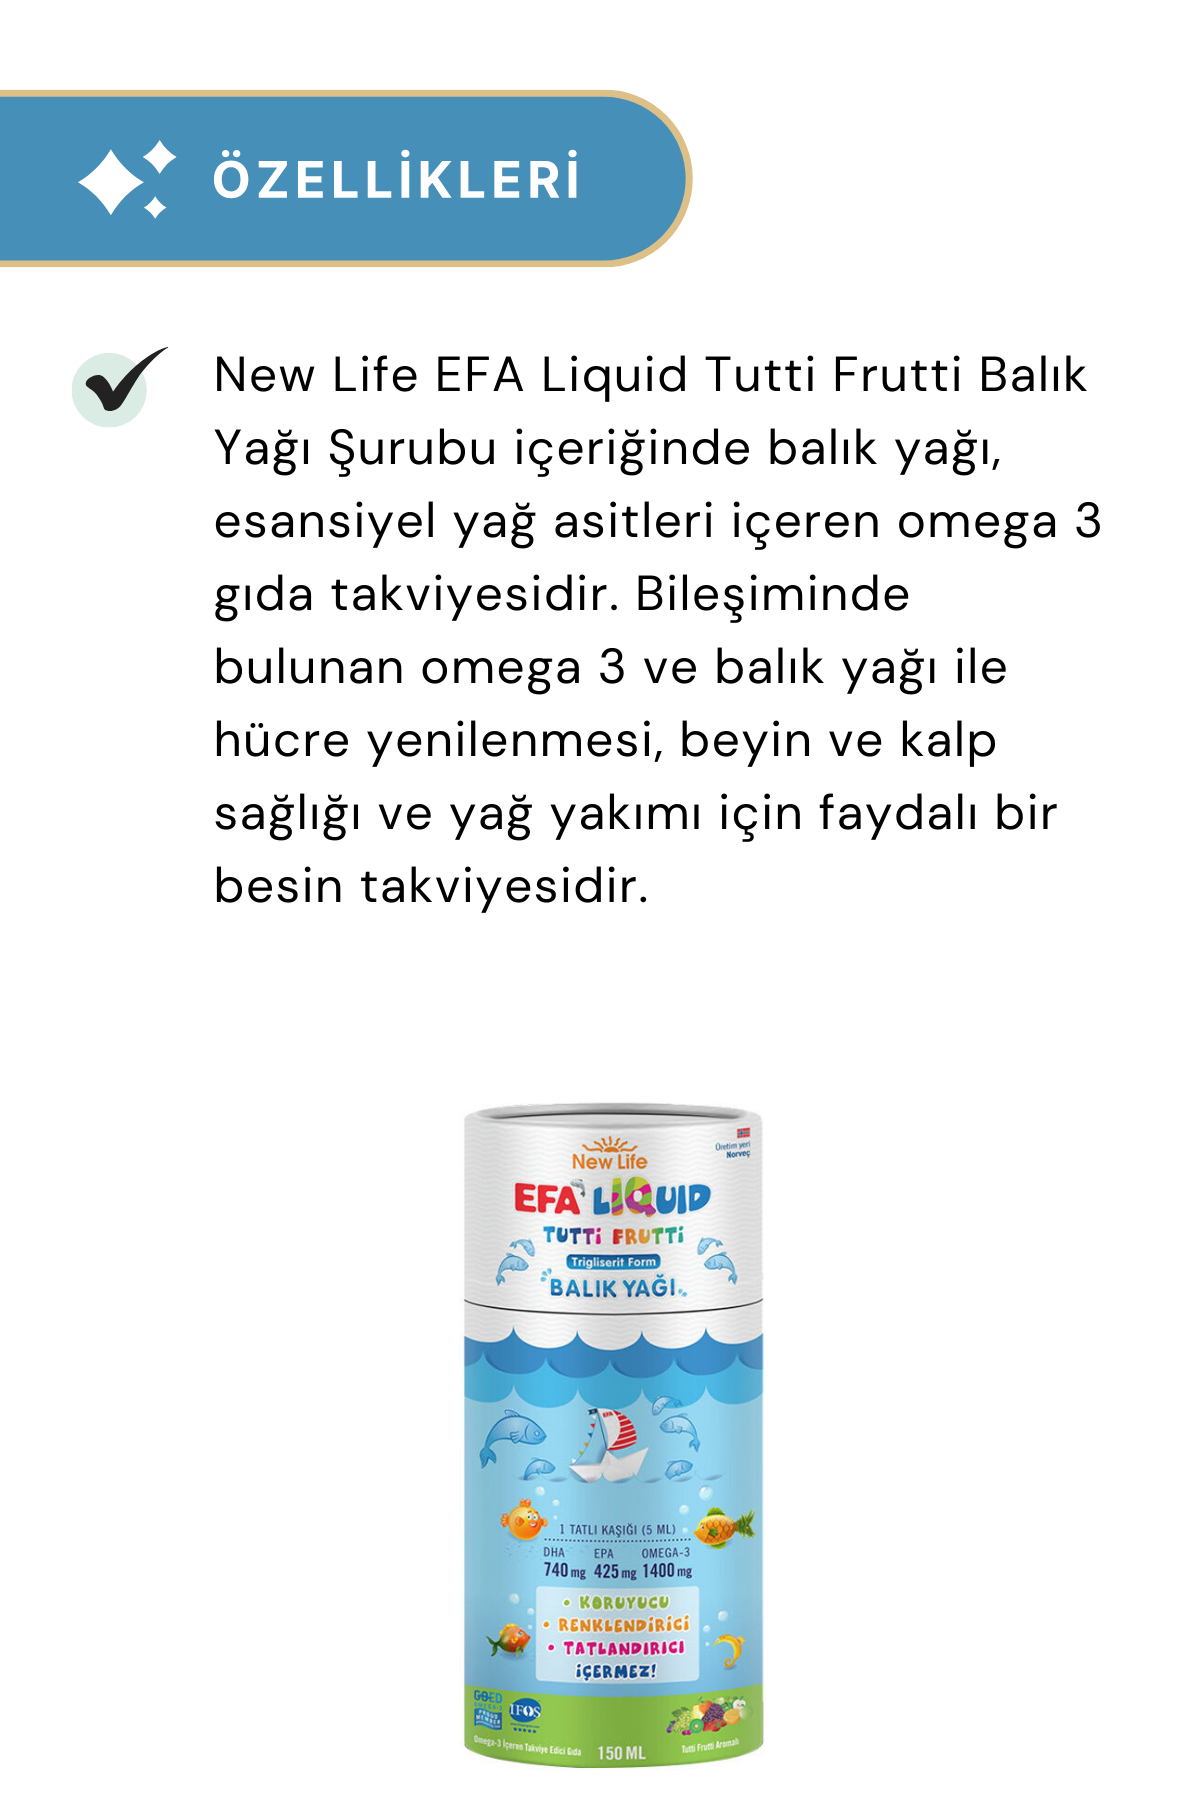 New Life EFA Liquid Tutti Frutti 150 ml Balık Yağı Şurubu - 2'li Set